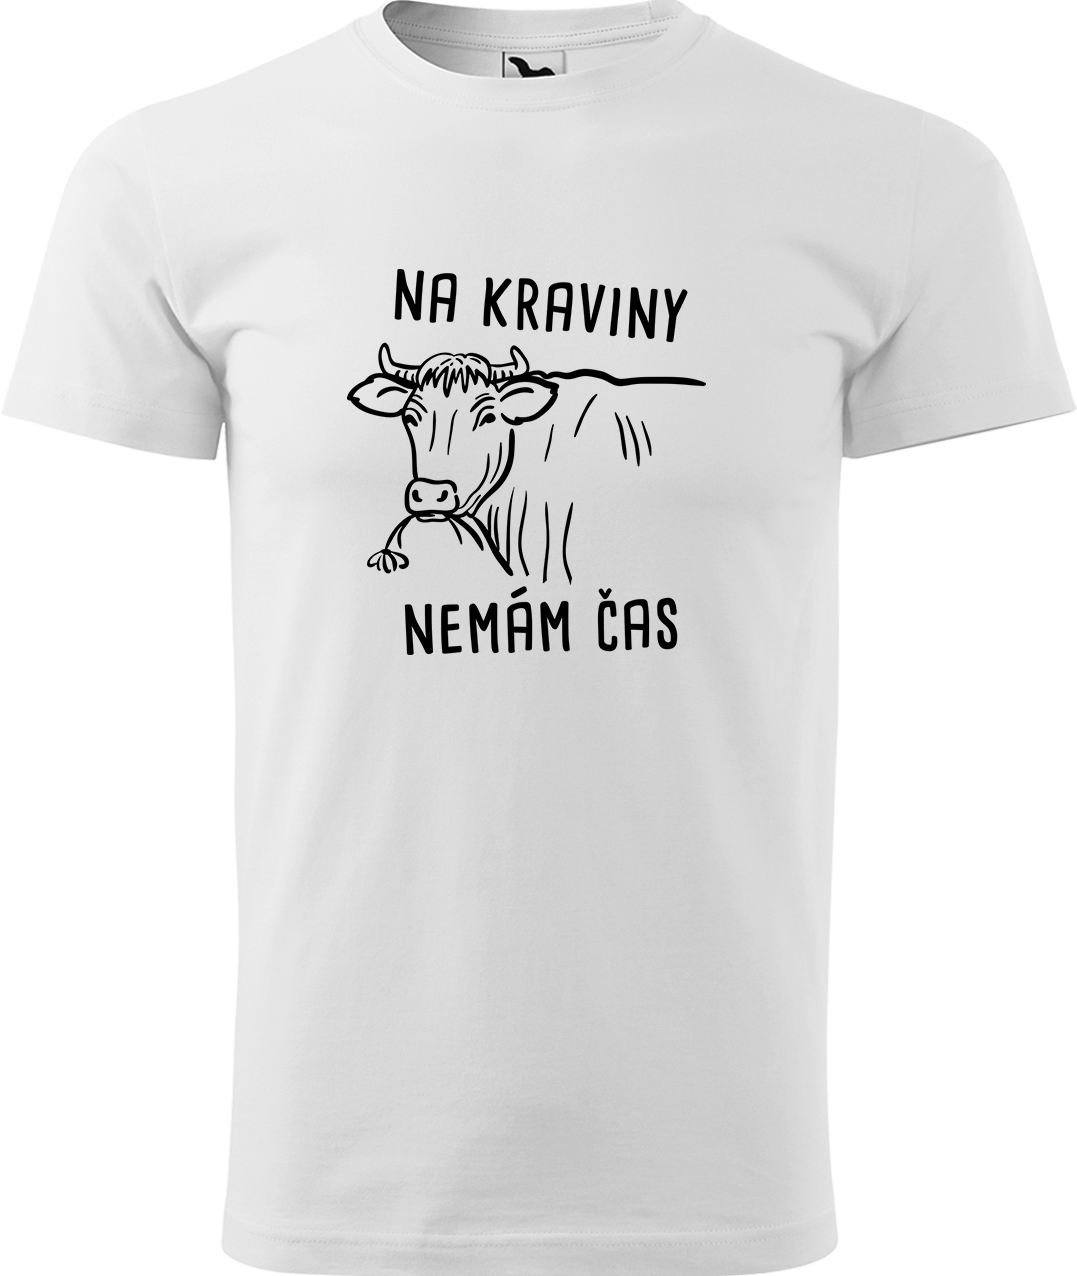 Pánské tričko s krávou - Na kraviny nemám čas Velikost: L, Barva: Bílá (00), Střih: pánský